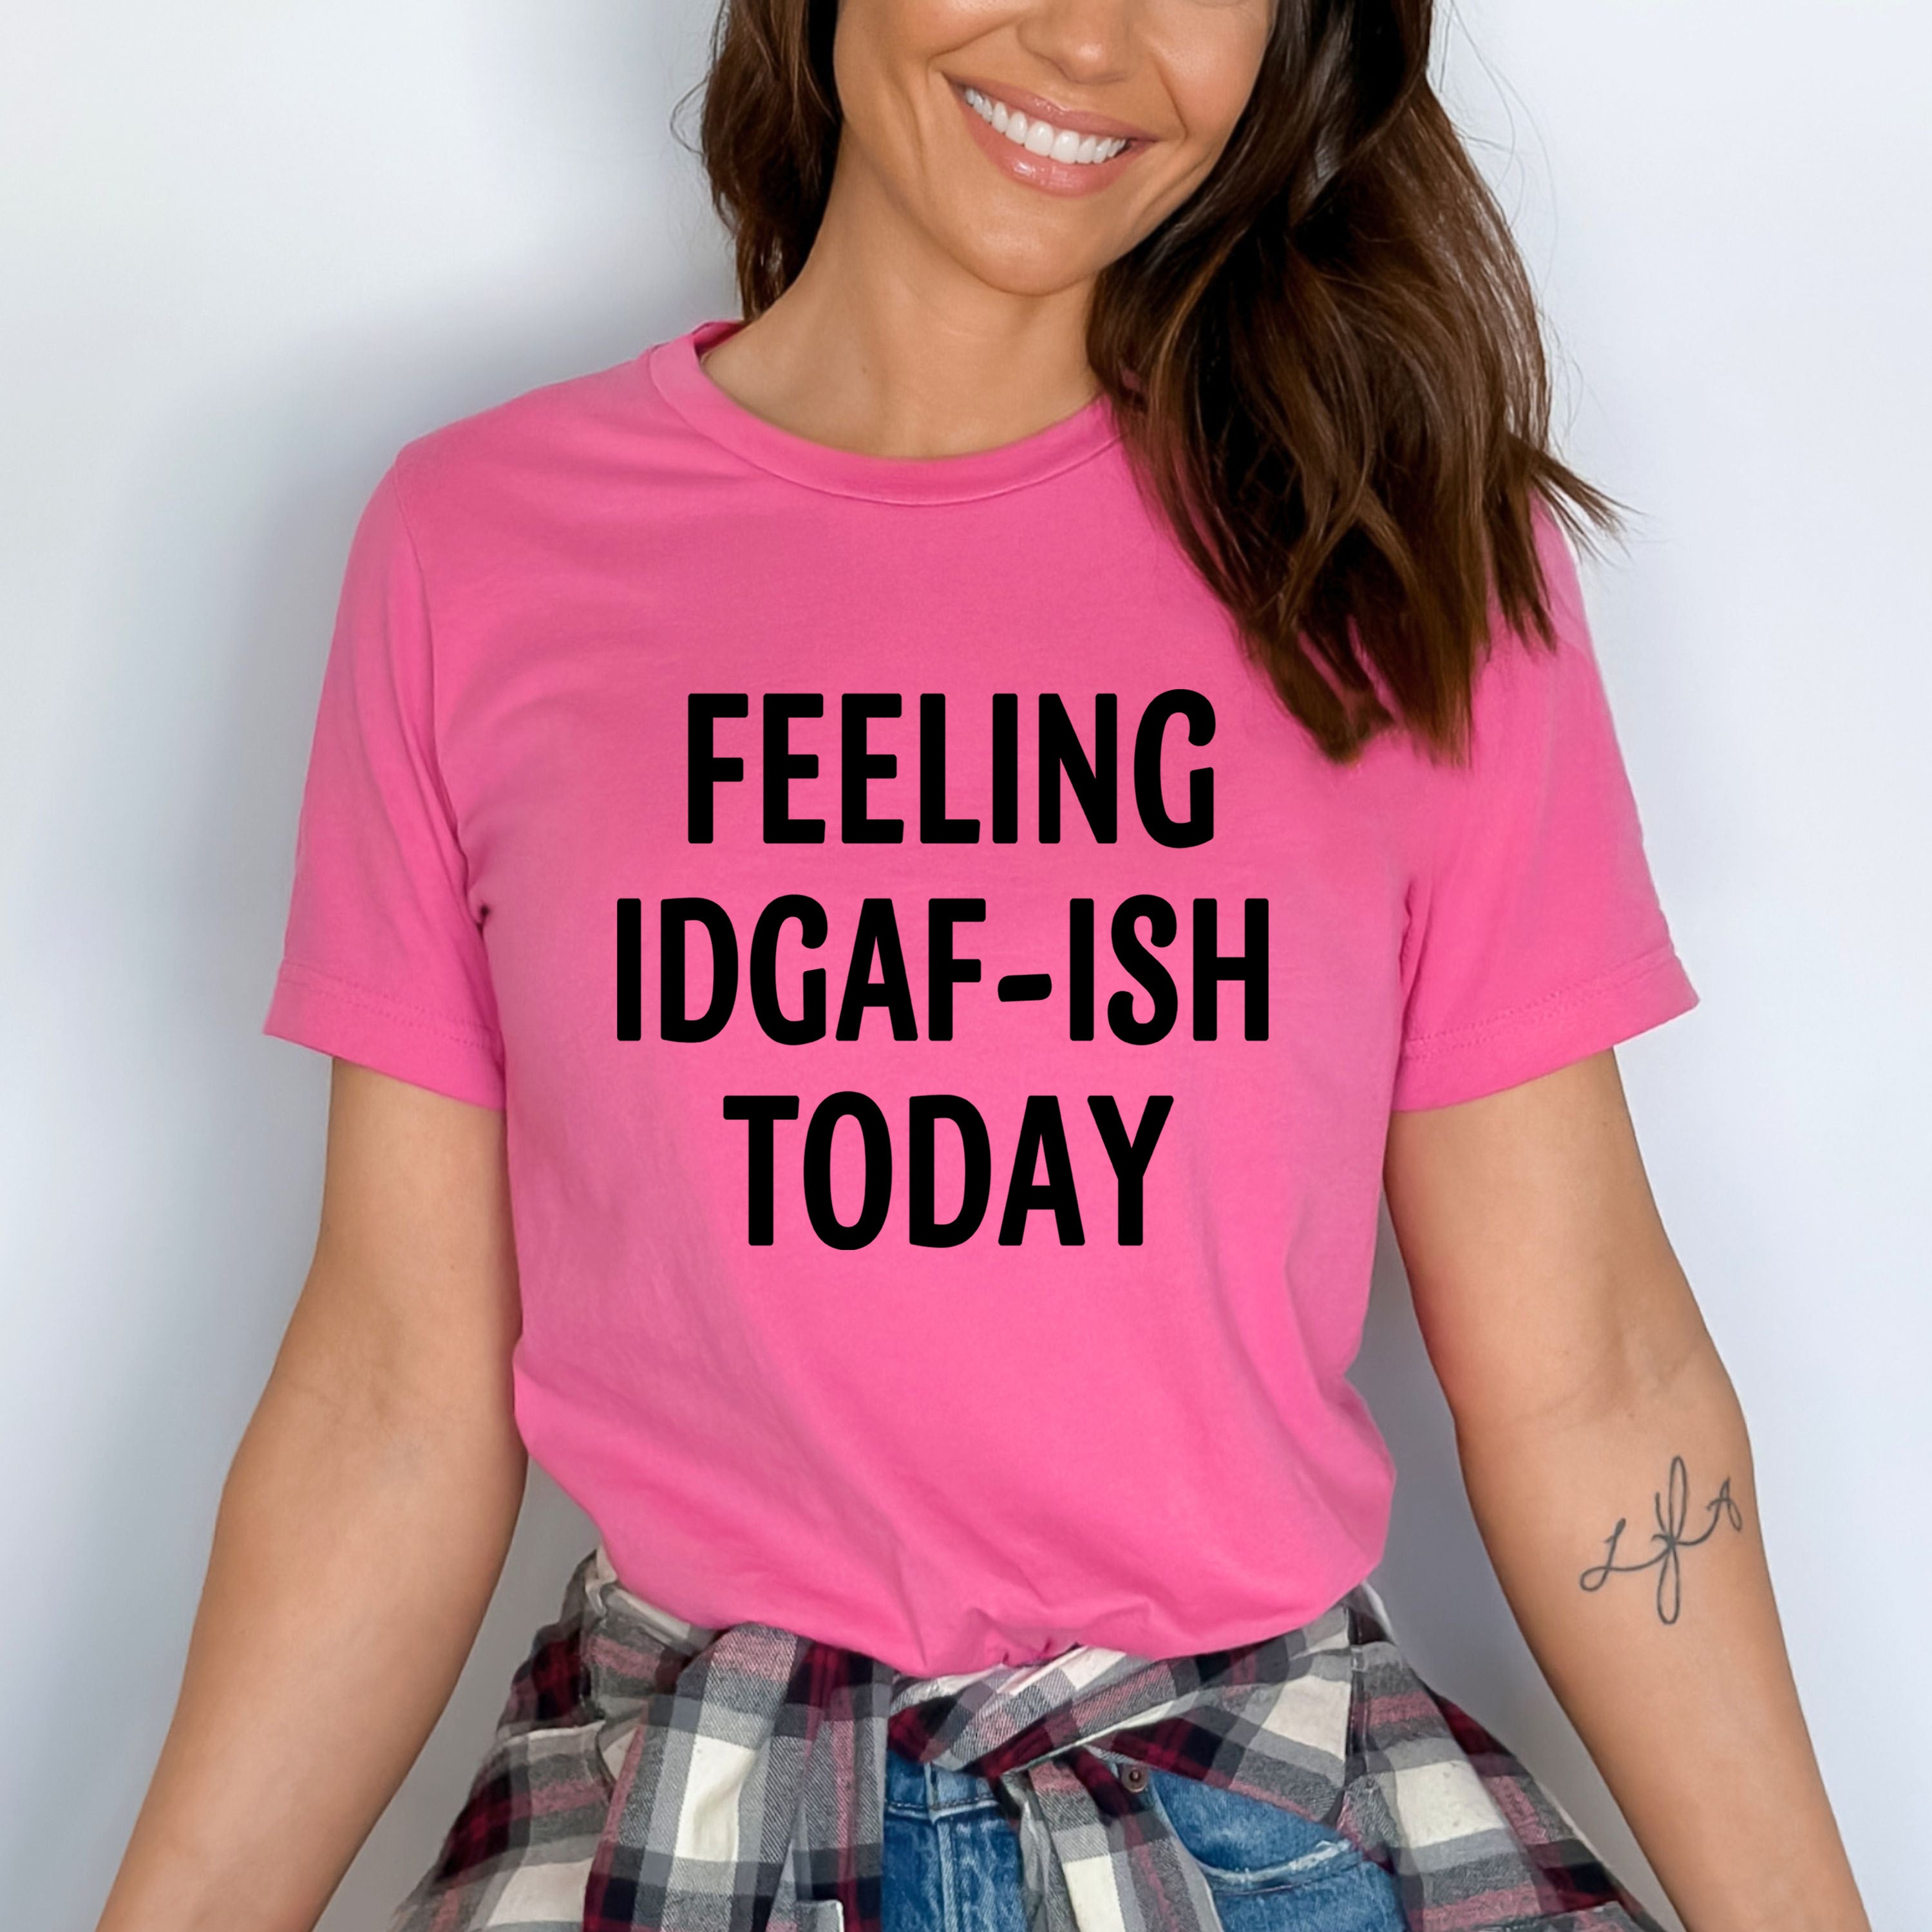 "FEELING IDGAF-ISH TODAY"